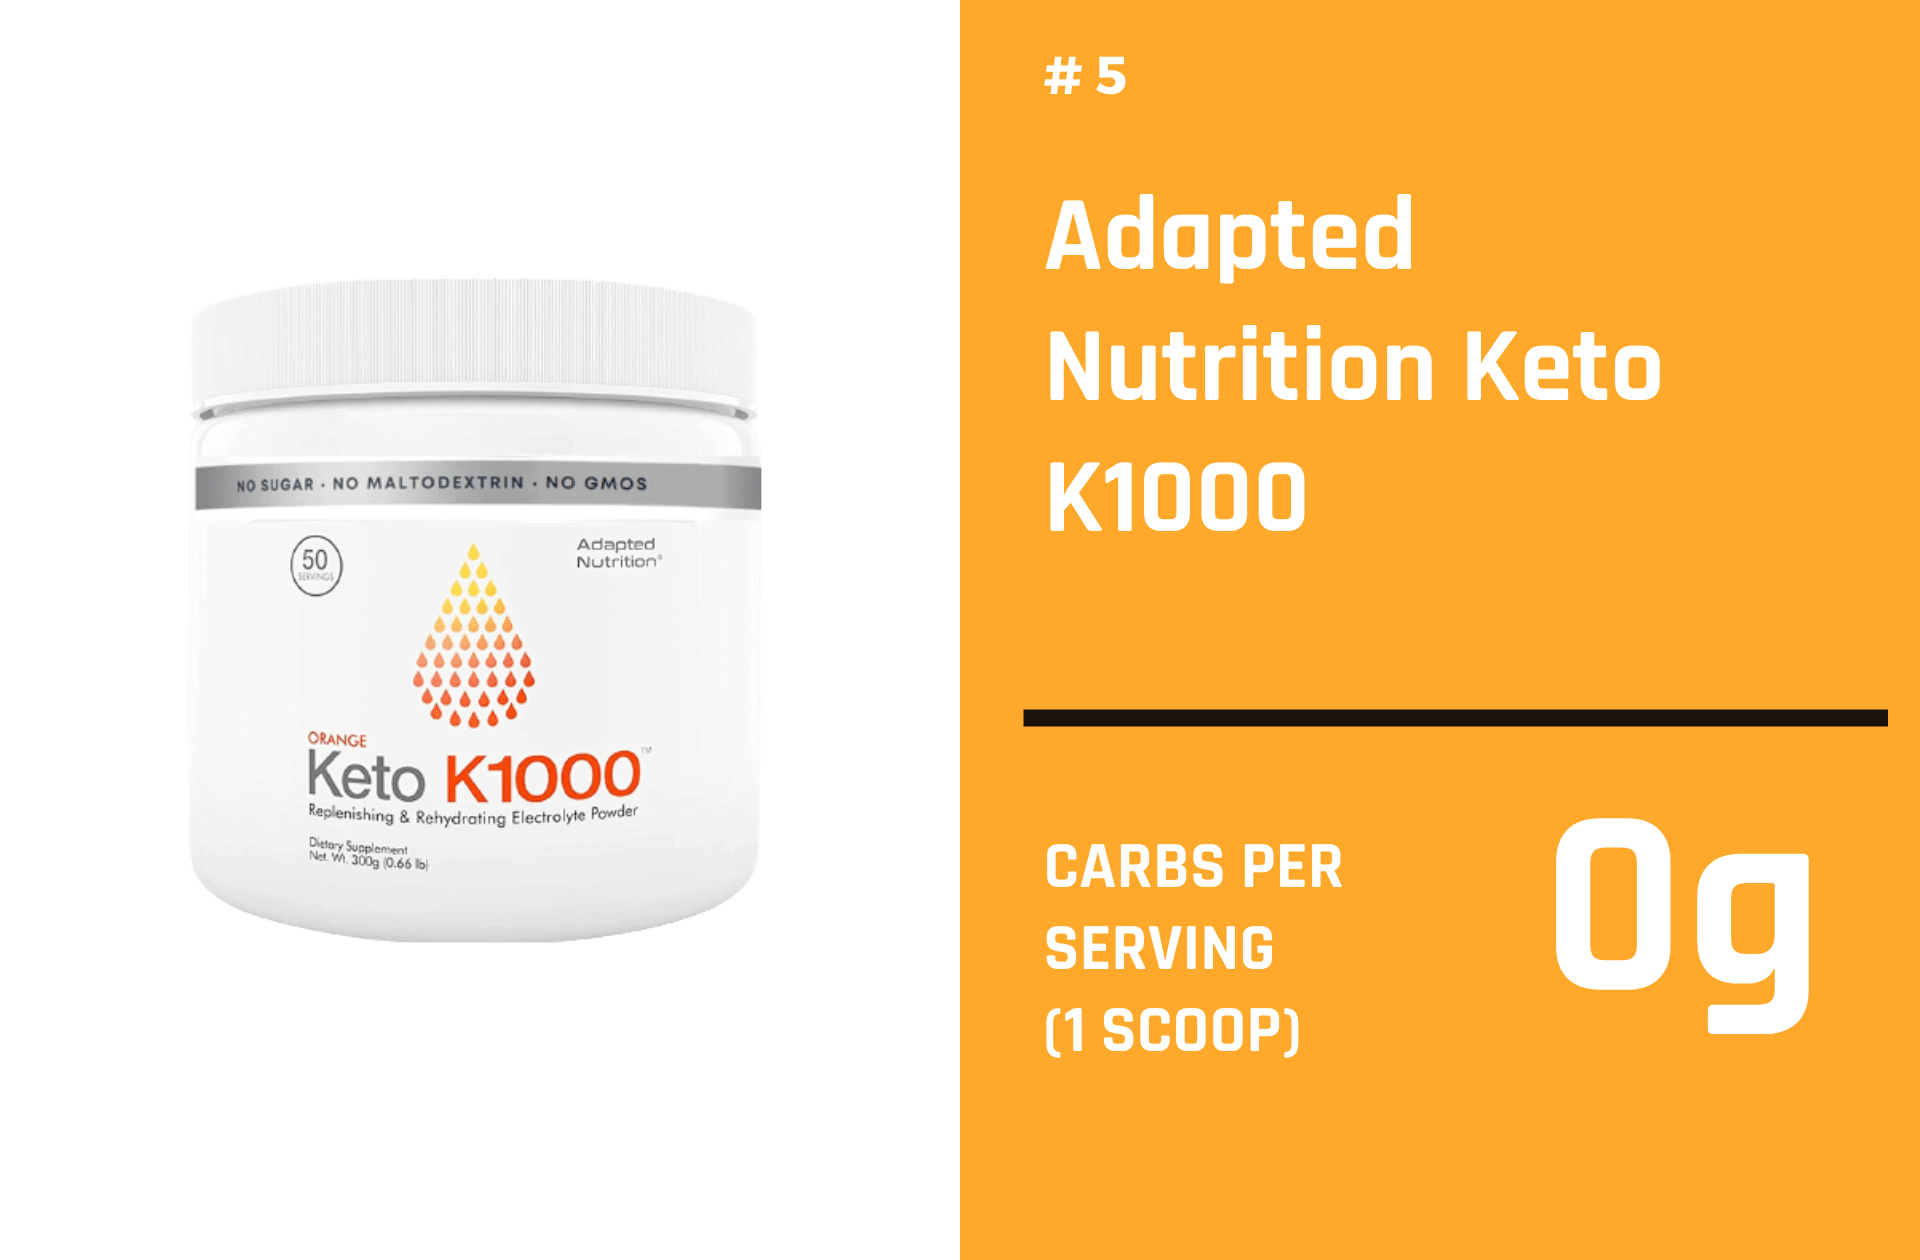 Adapted Nutrition Keto K1000